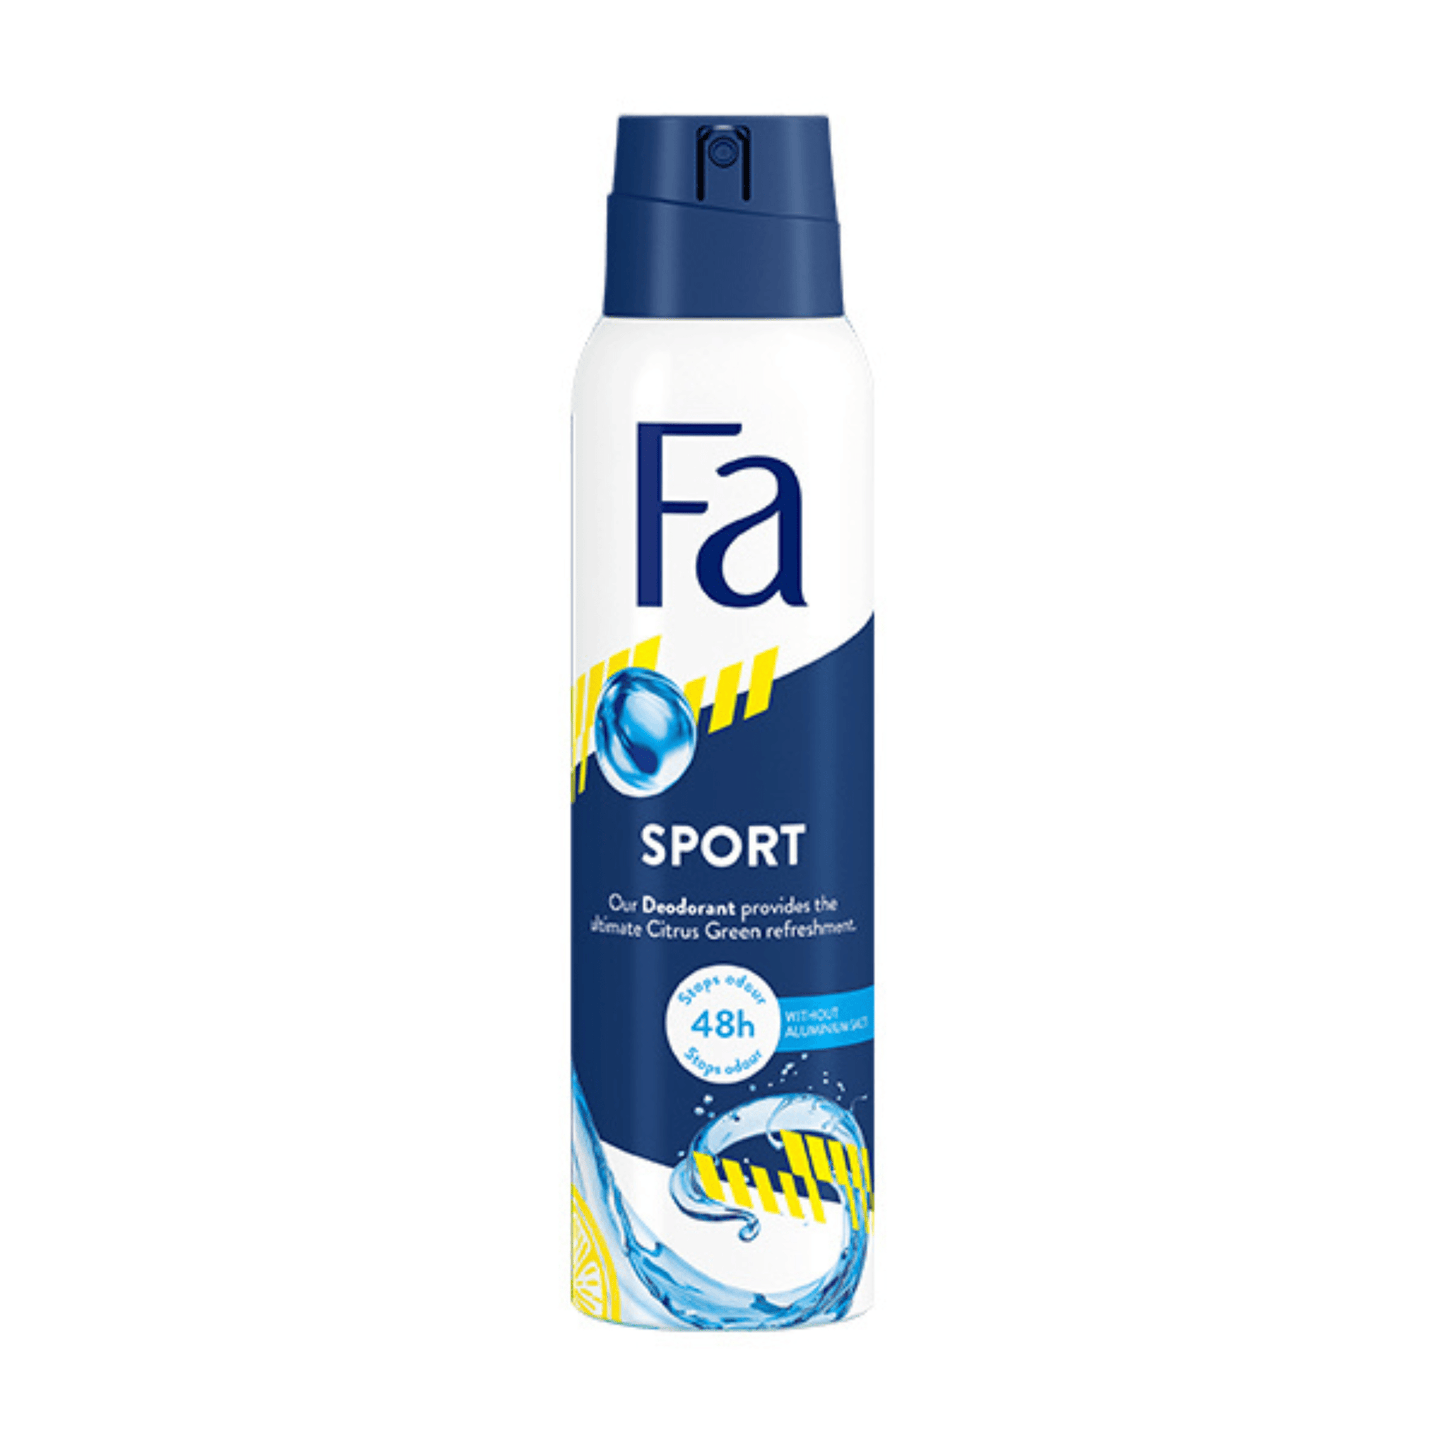 Primary Image of Primary image of Sport Spray Deodorant